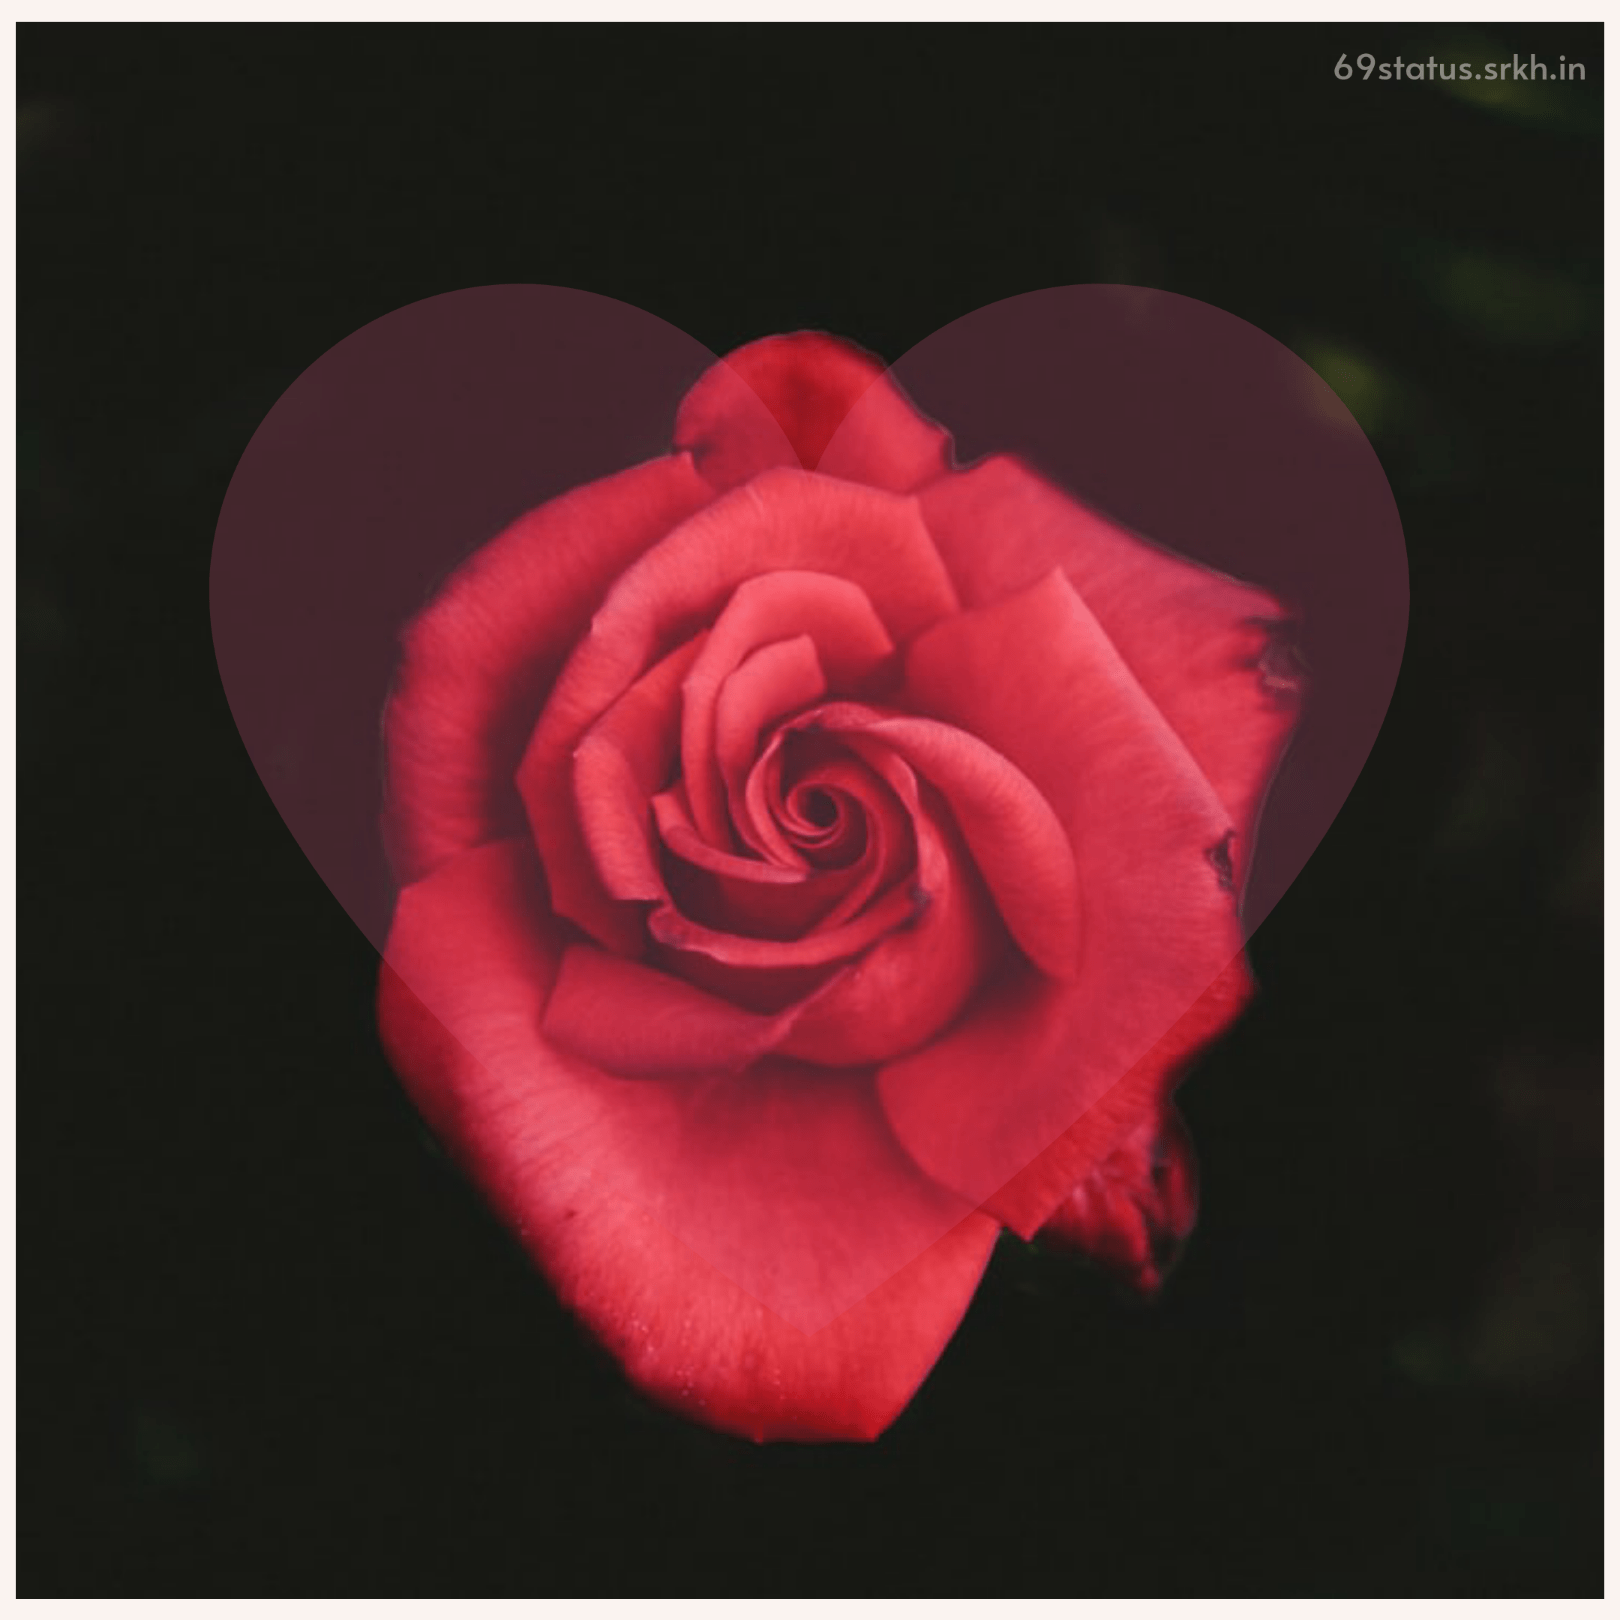 Love Rose image hd